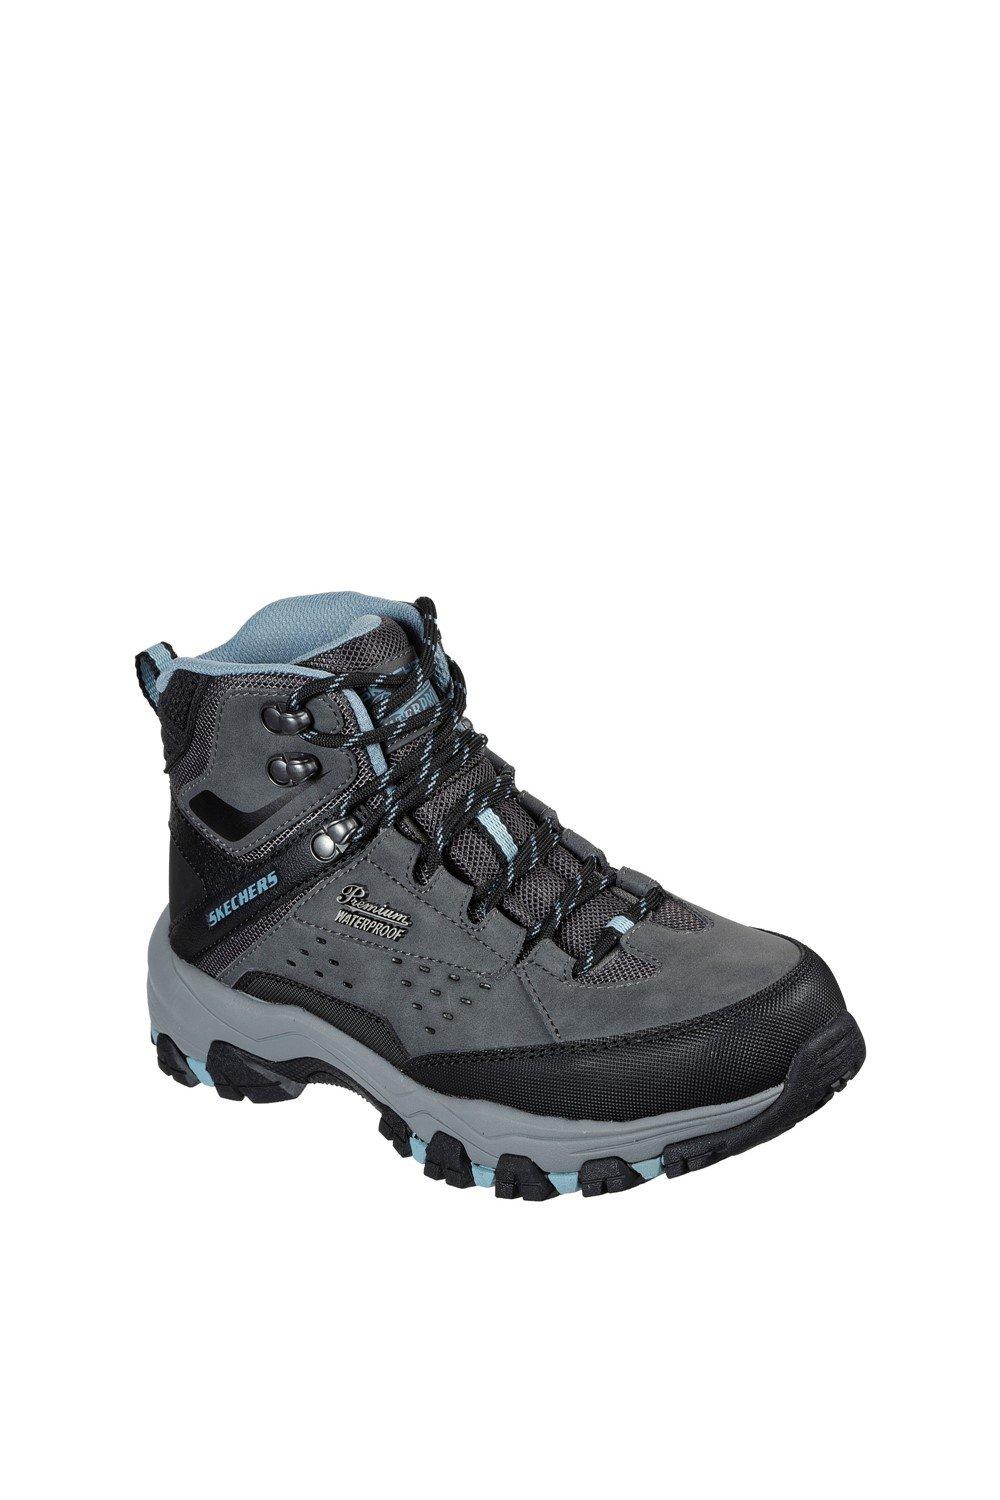 Buy SKECHERS Womens Selmen Waterproof Hiking Shoes Black/Charcoal